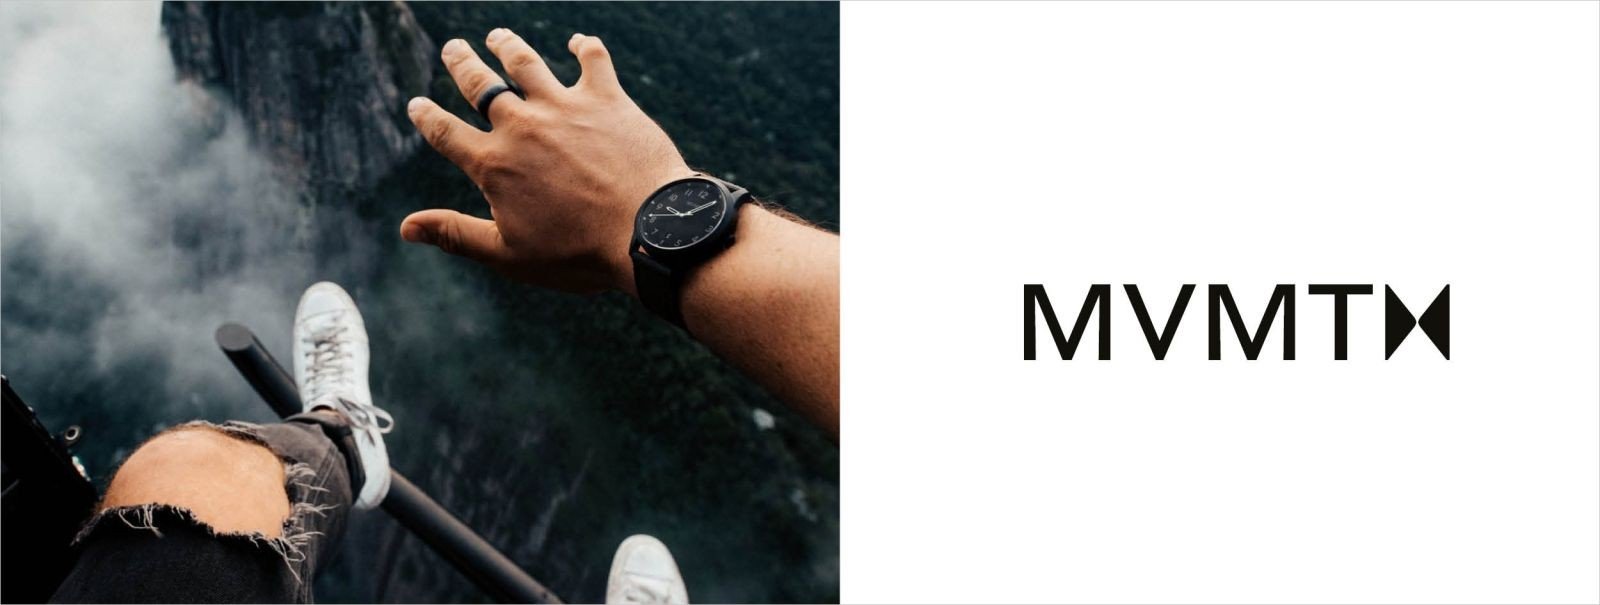 MVMT horloges